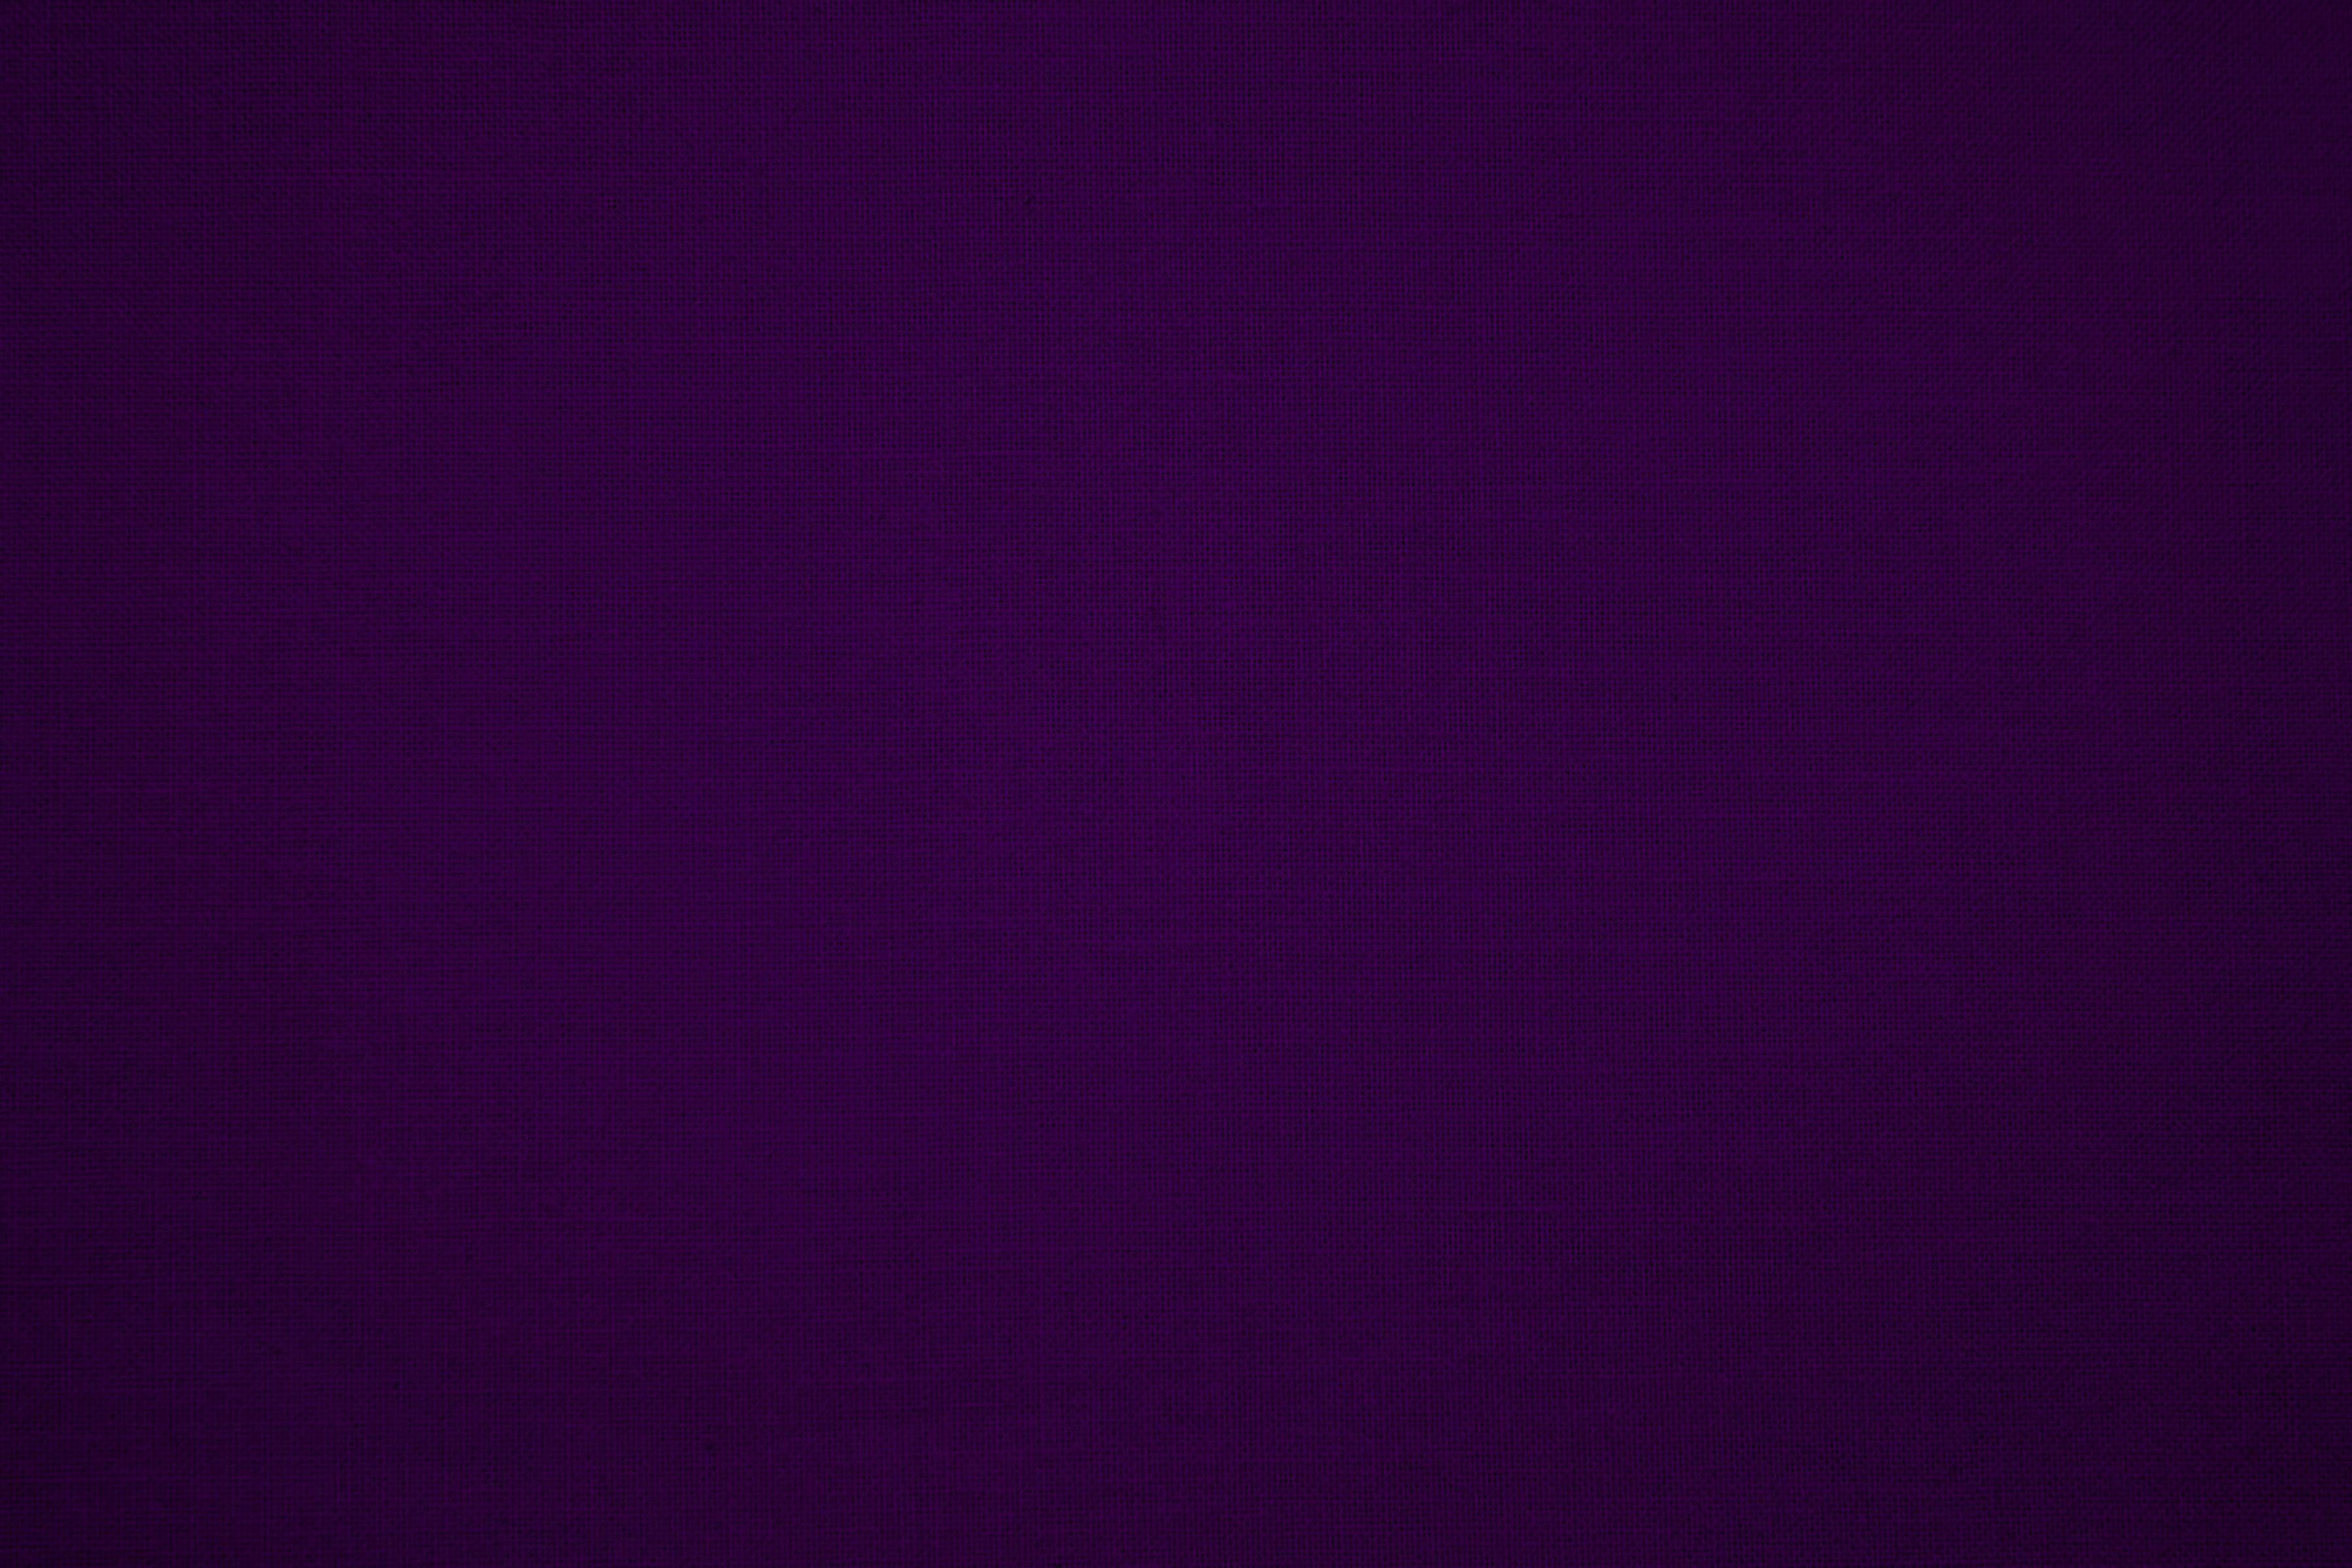 Solid Dark Purple Wallpaper